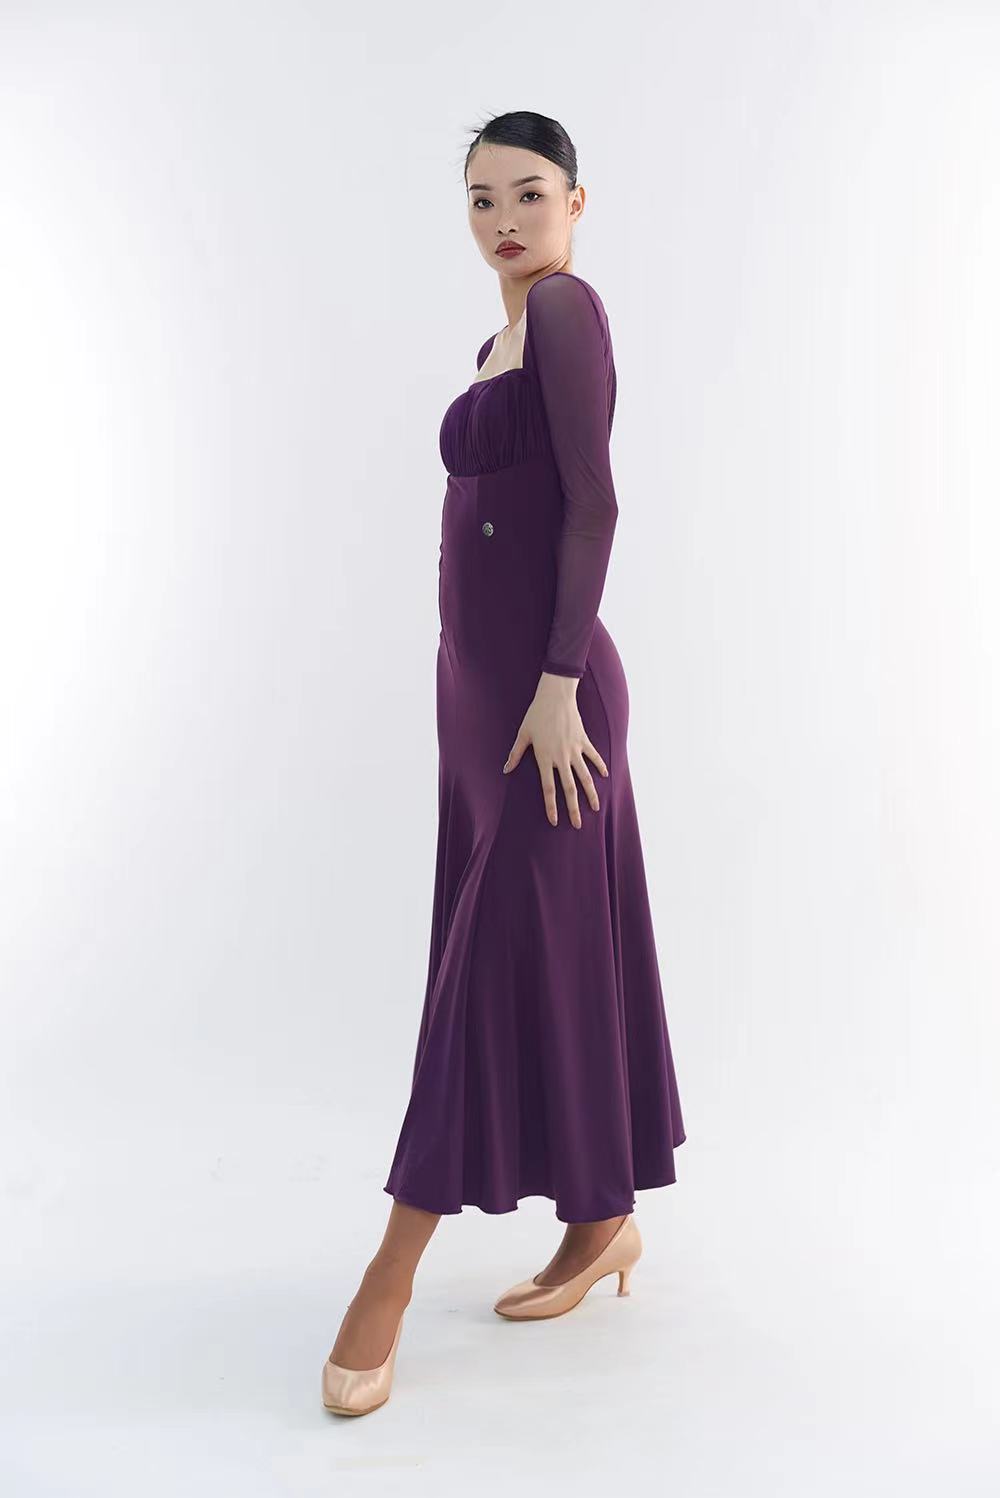 DANCE QUEEN 581-2 Tailor Made Dark Purple Dress